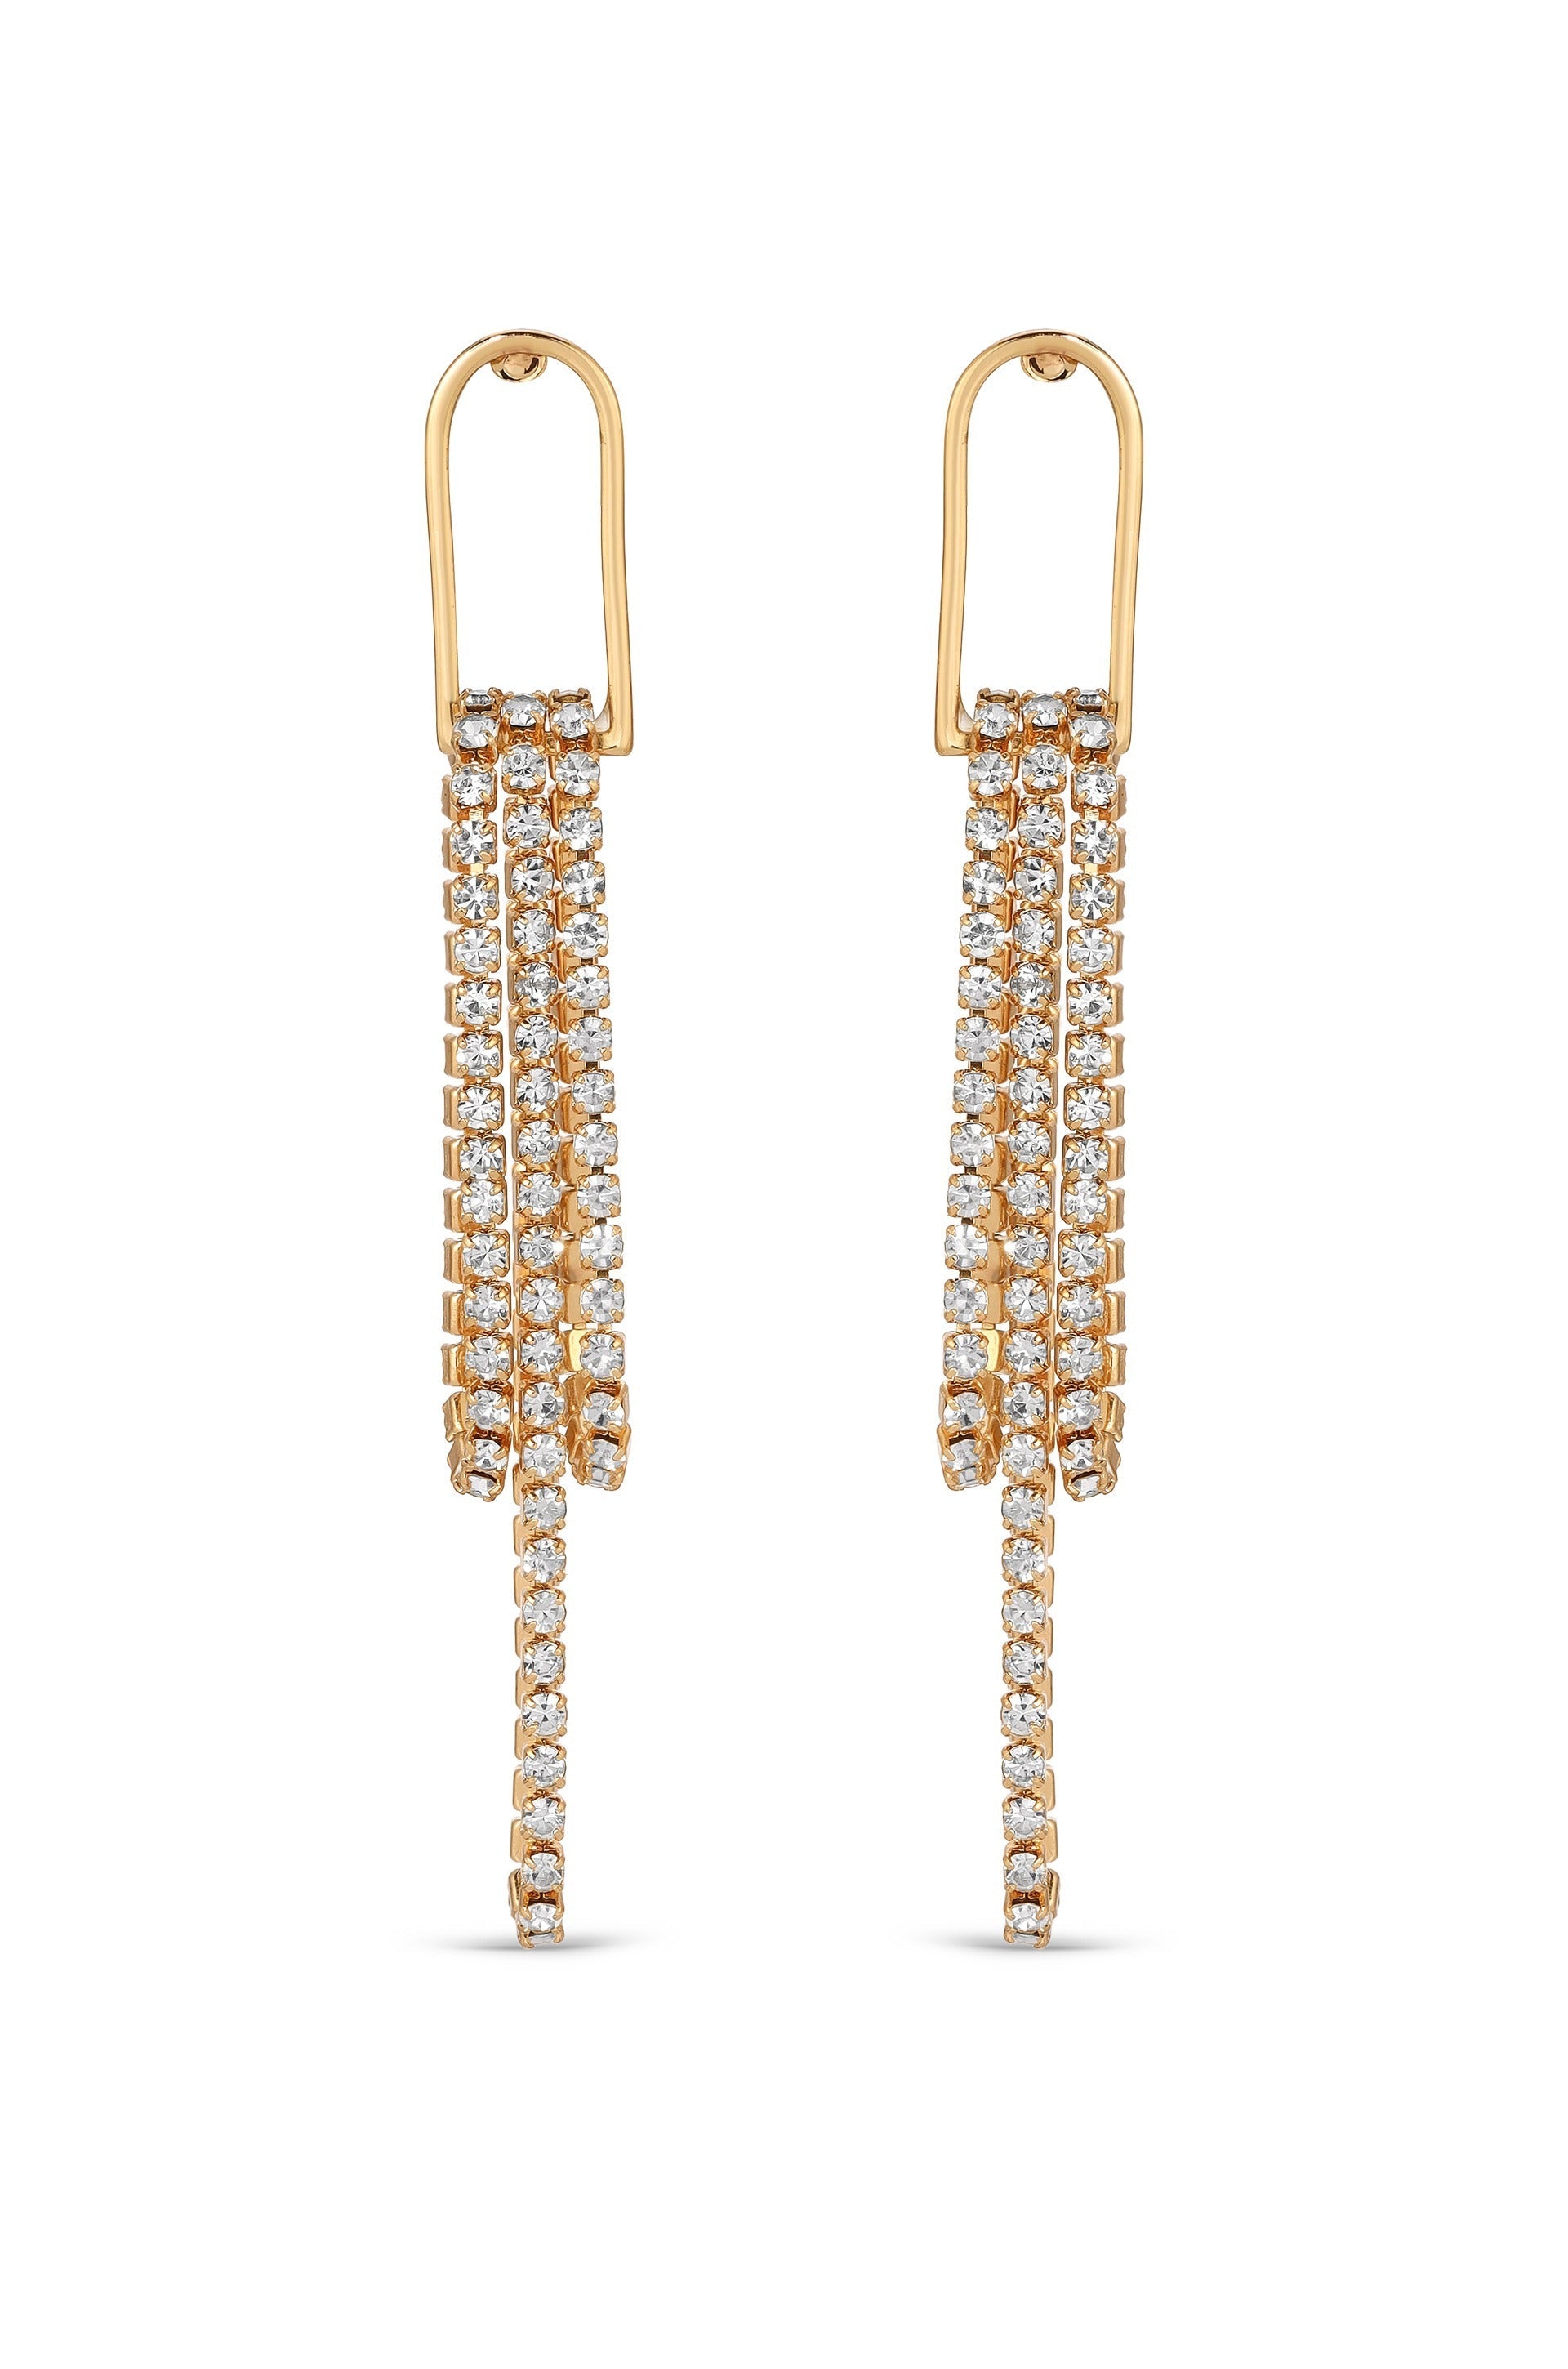 Hanging On Crystal Dangle Earrings - Premium Earrings from Ettika - Just $40! Shop now at Tooksie